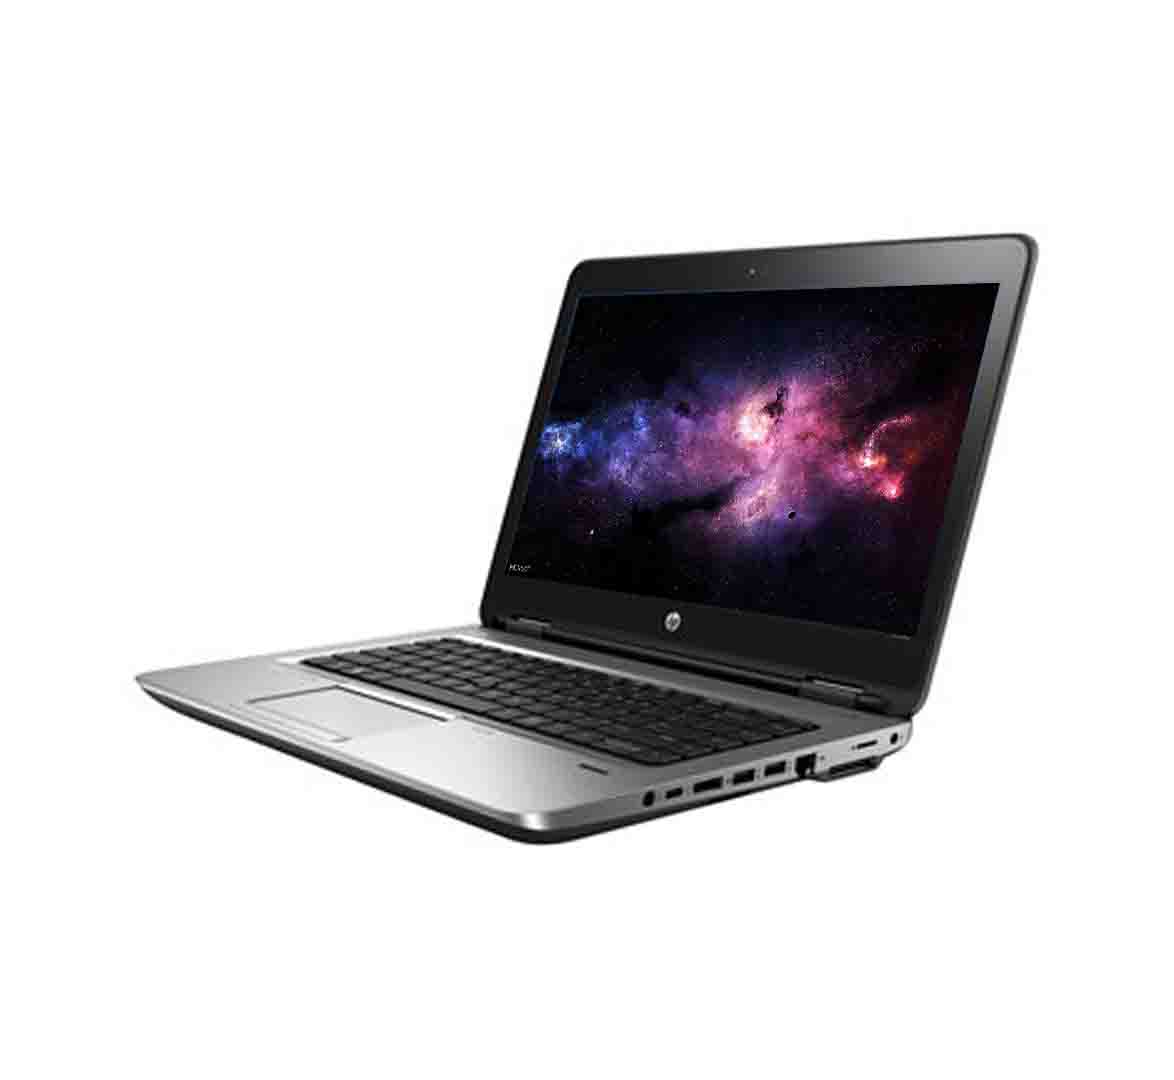 HP ProBook 640 G2 Business Laptop, Intel Core i5-6th Generation CPU, 8GB RAM, 256GB SSD, 14.1 inch Display, Windows 10 Pro